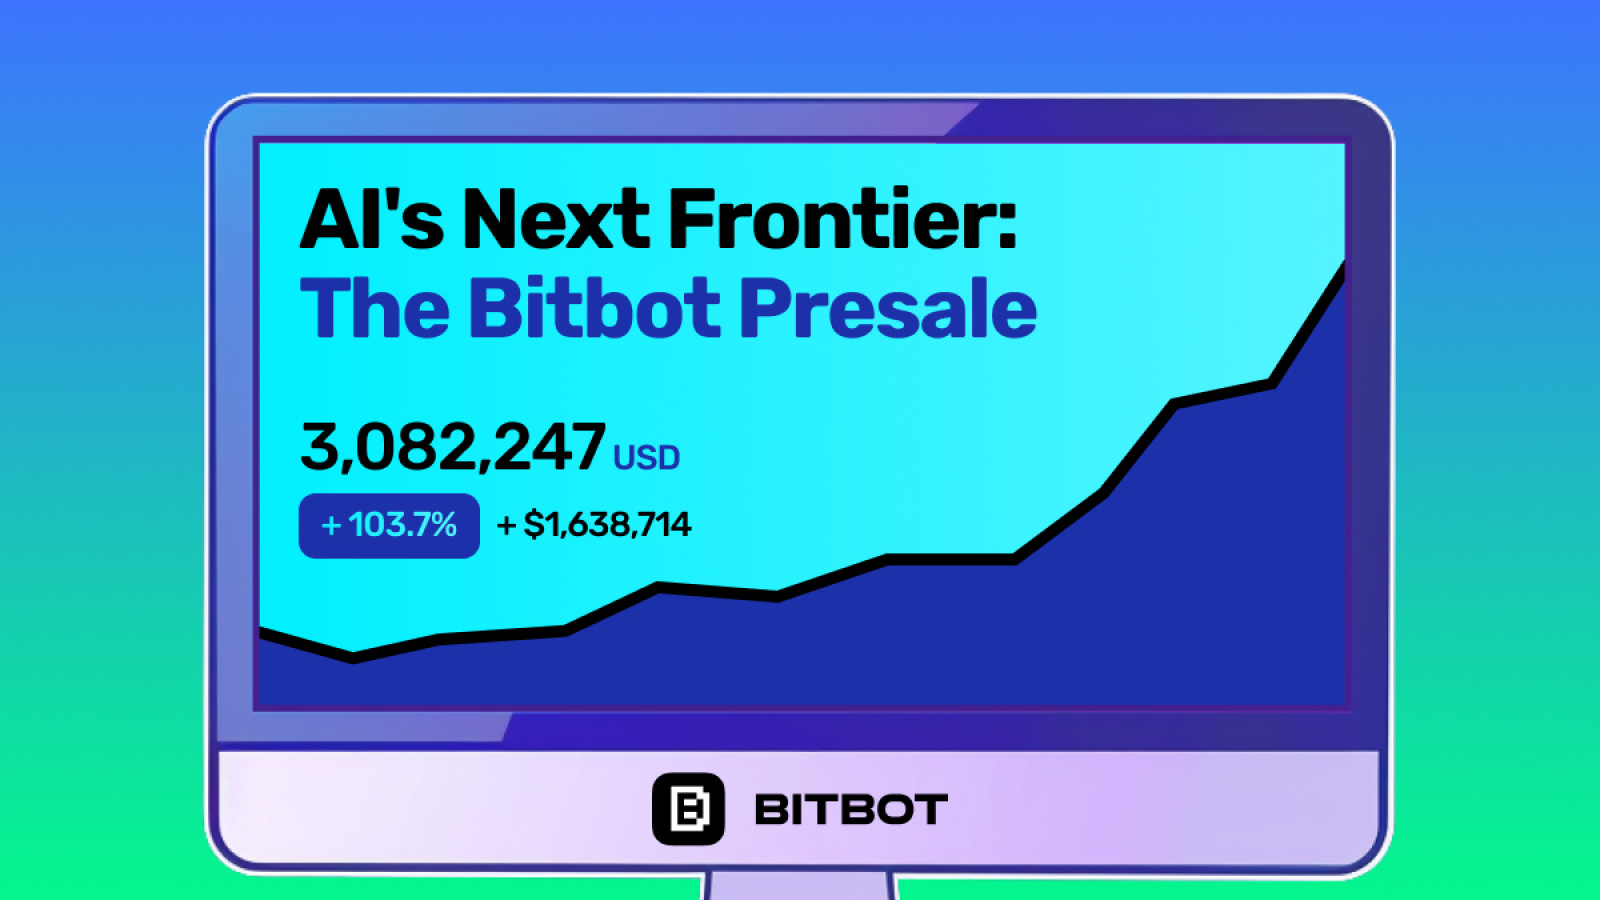 Bitbot's Presale Passes $3M After AI Development Update